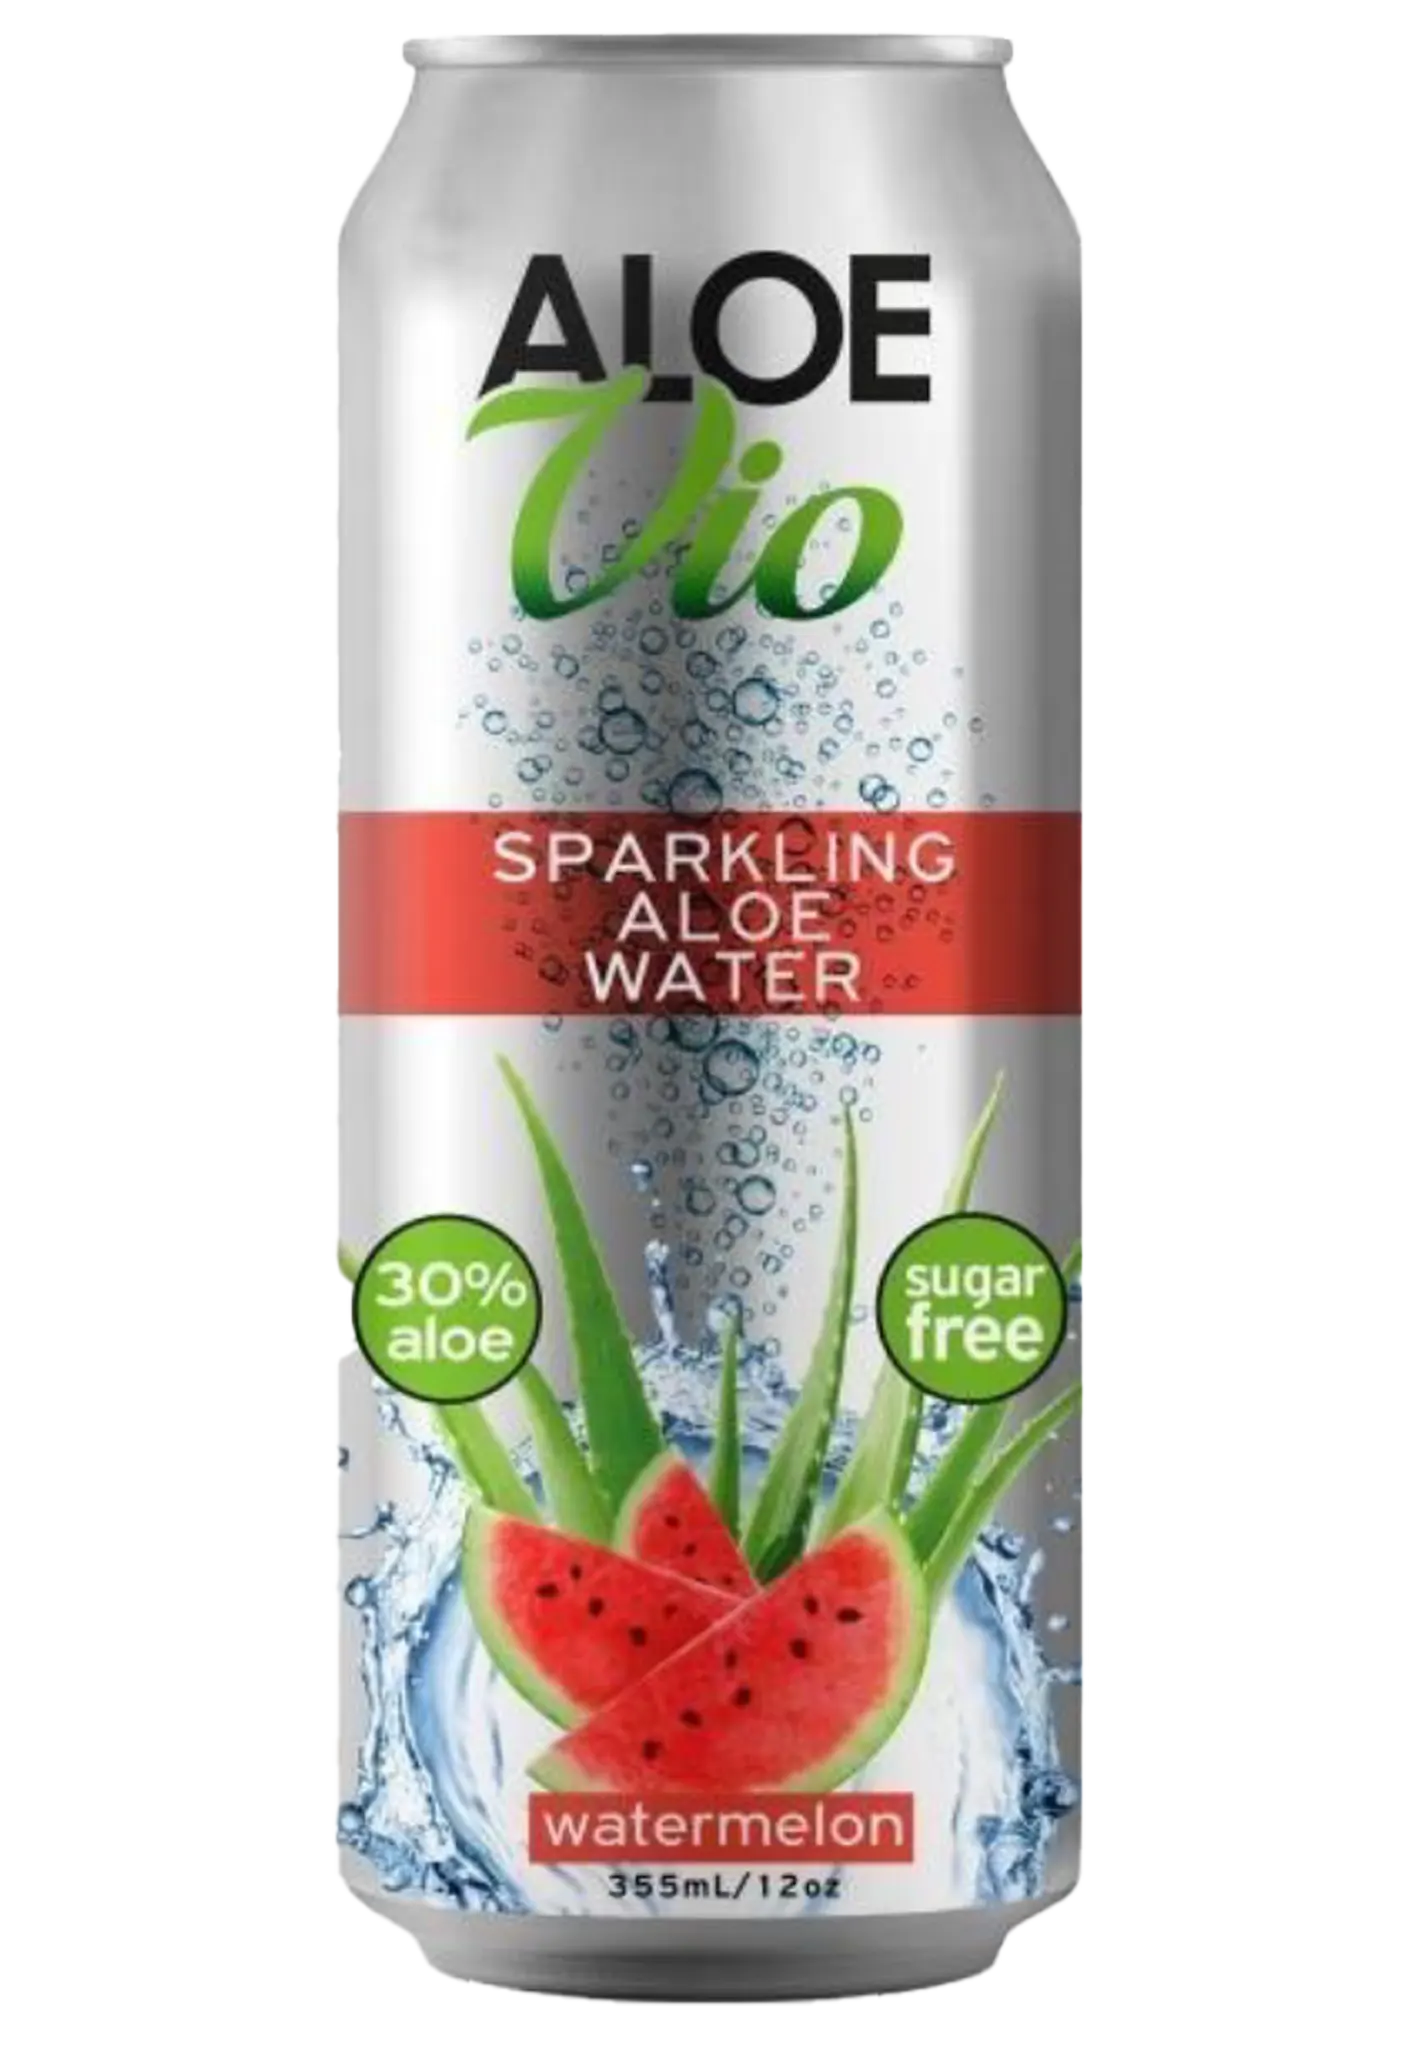 watermelon juice, aloe vera drinks